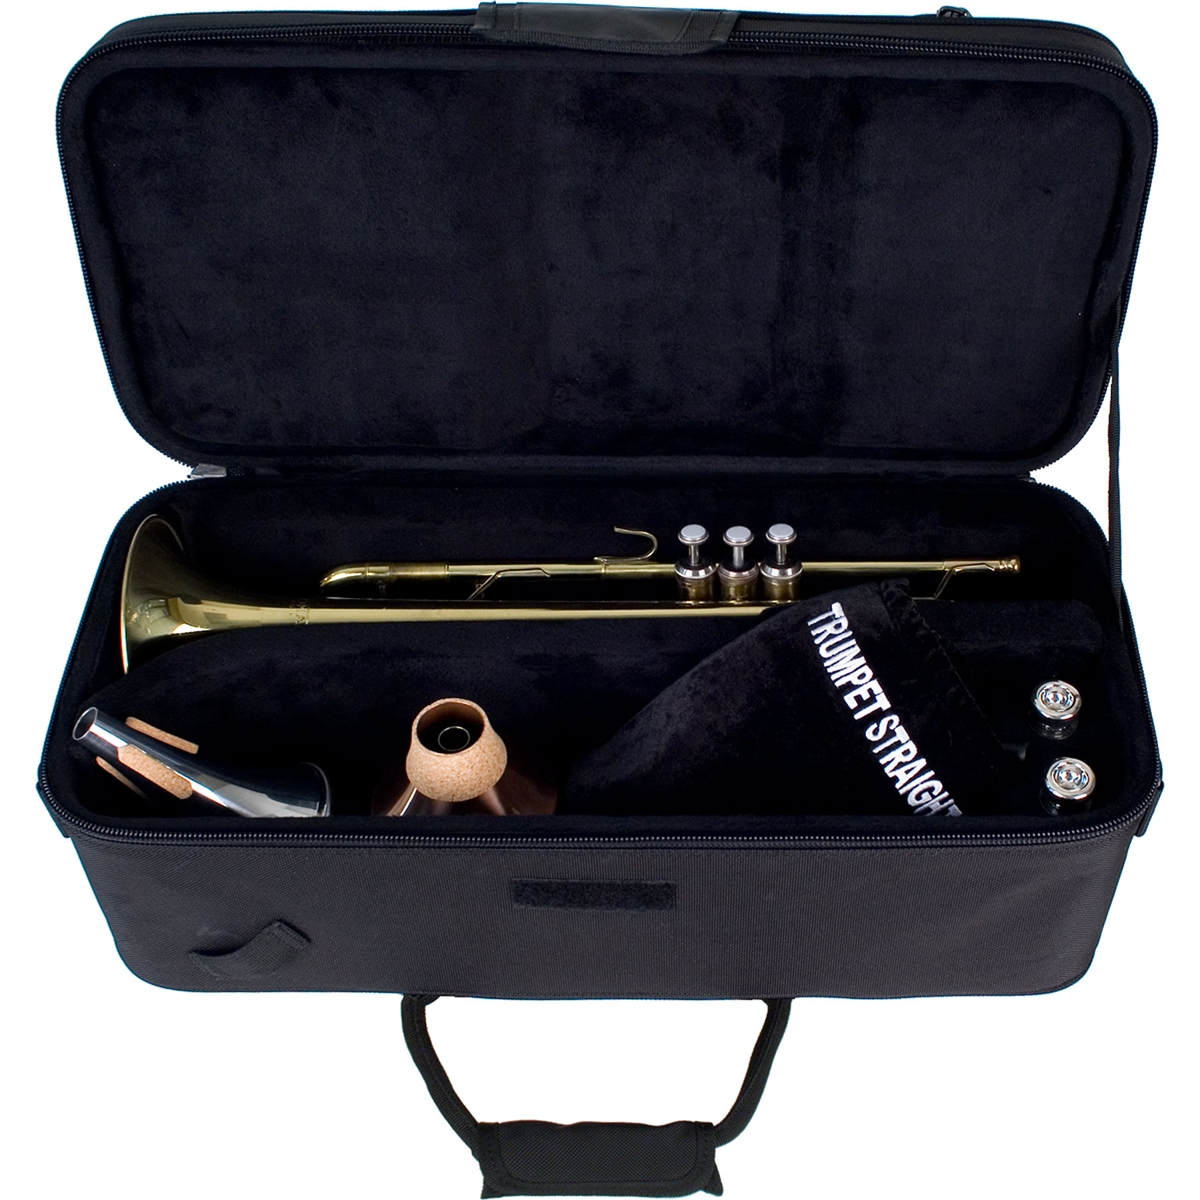 Protec PB301 Case for Trumpet